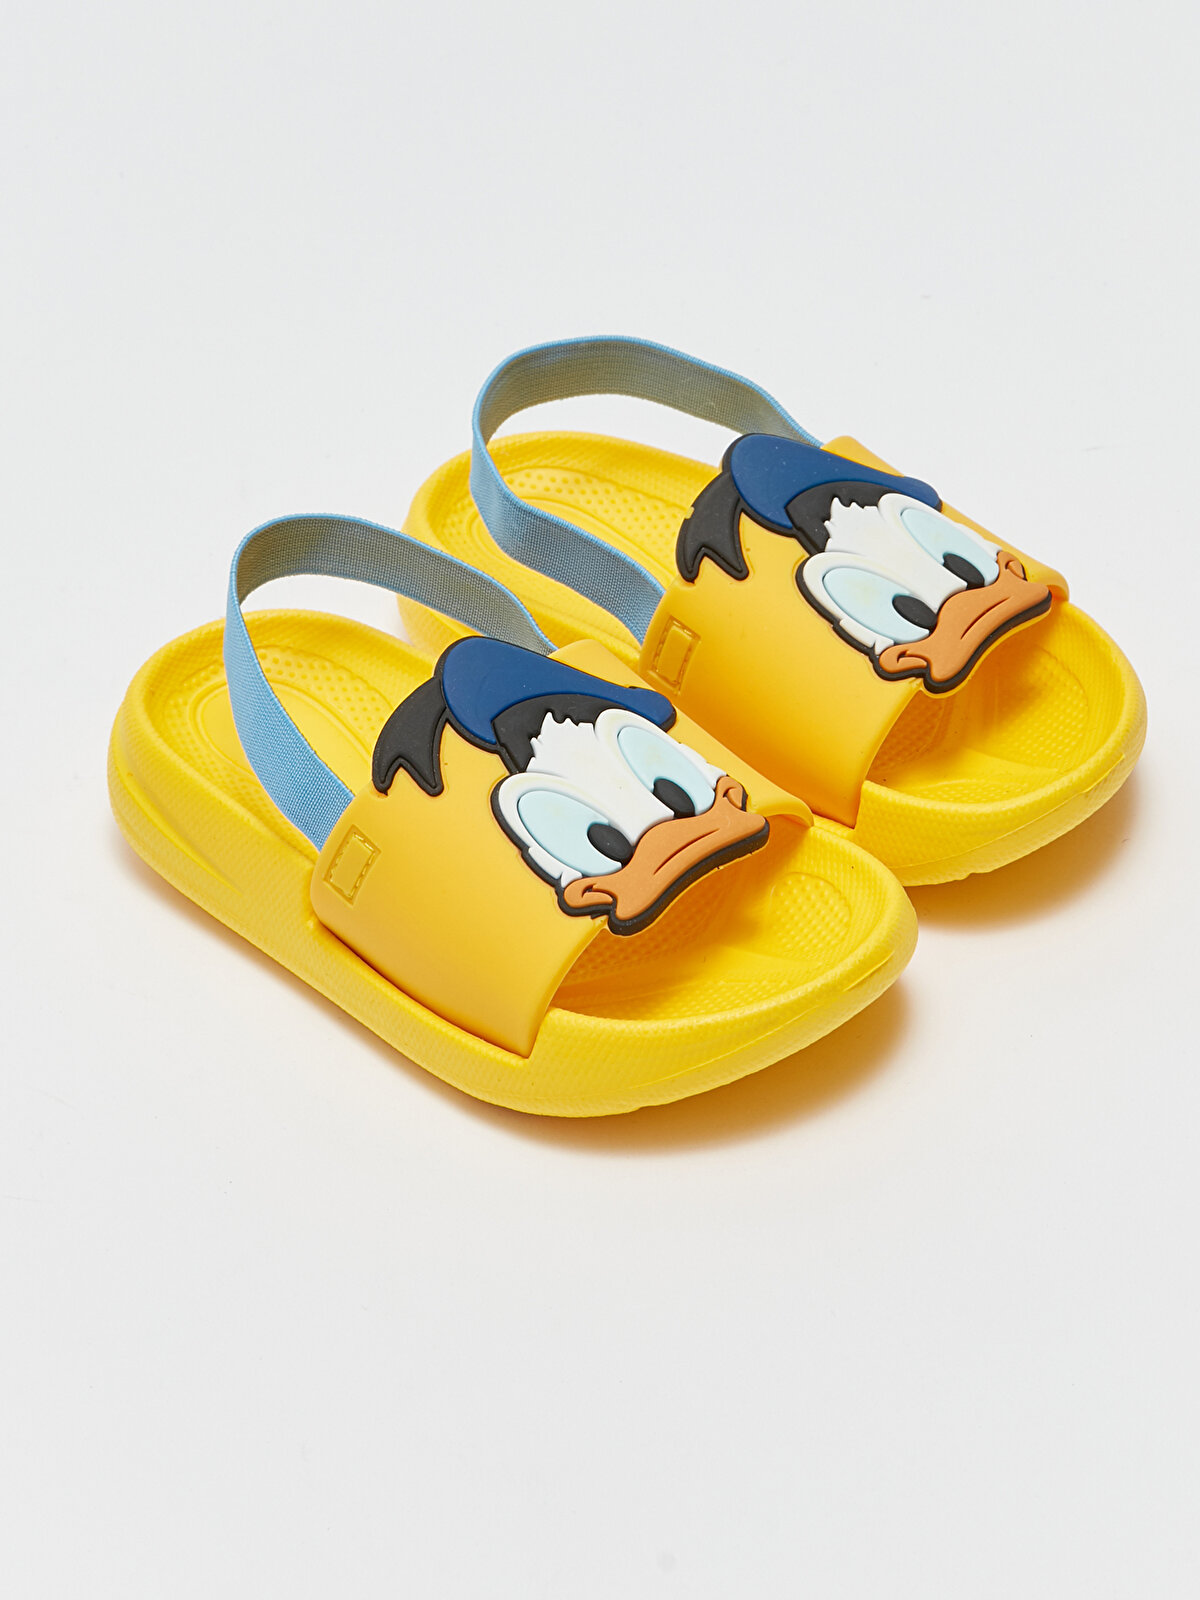 Mickey Mouse Adult Men's Comfort Slide Sandals - Walmart.com